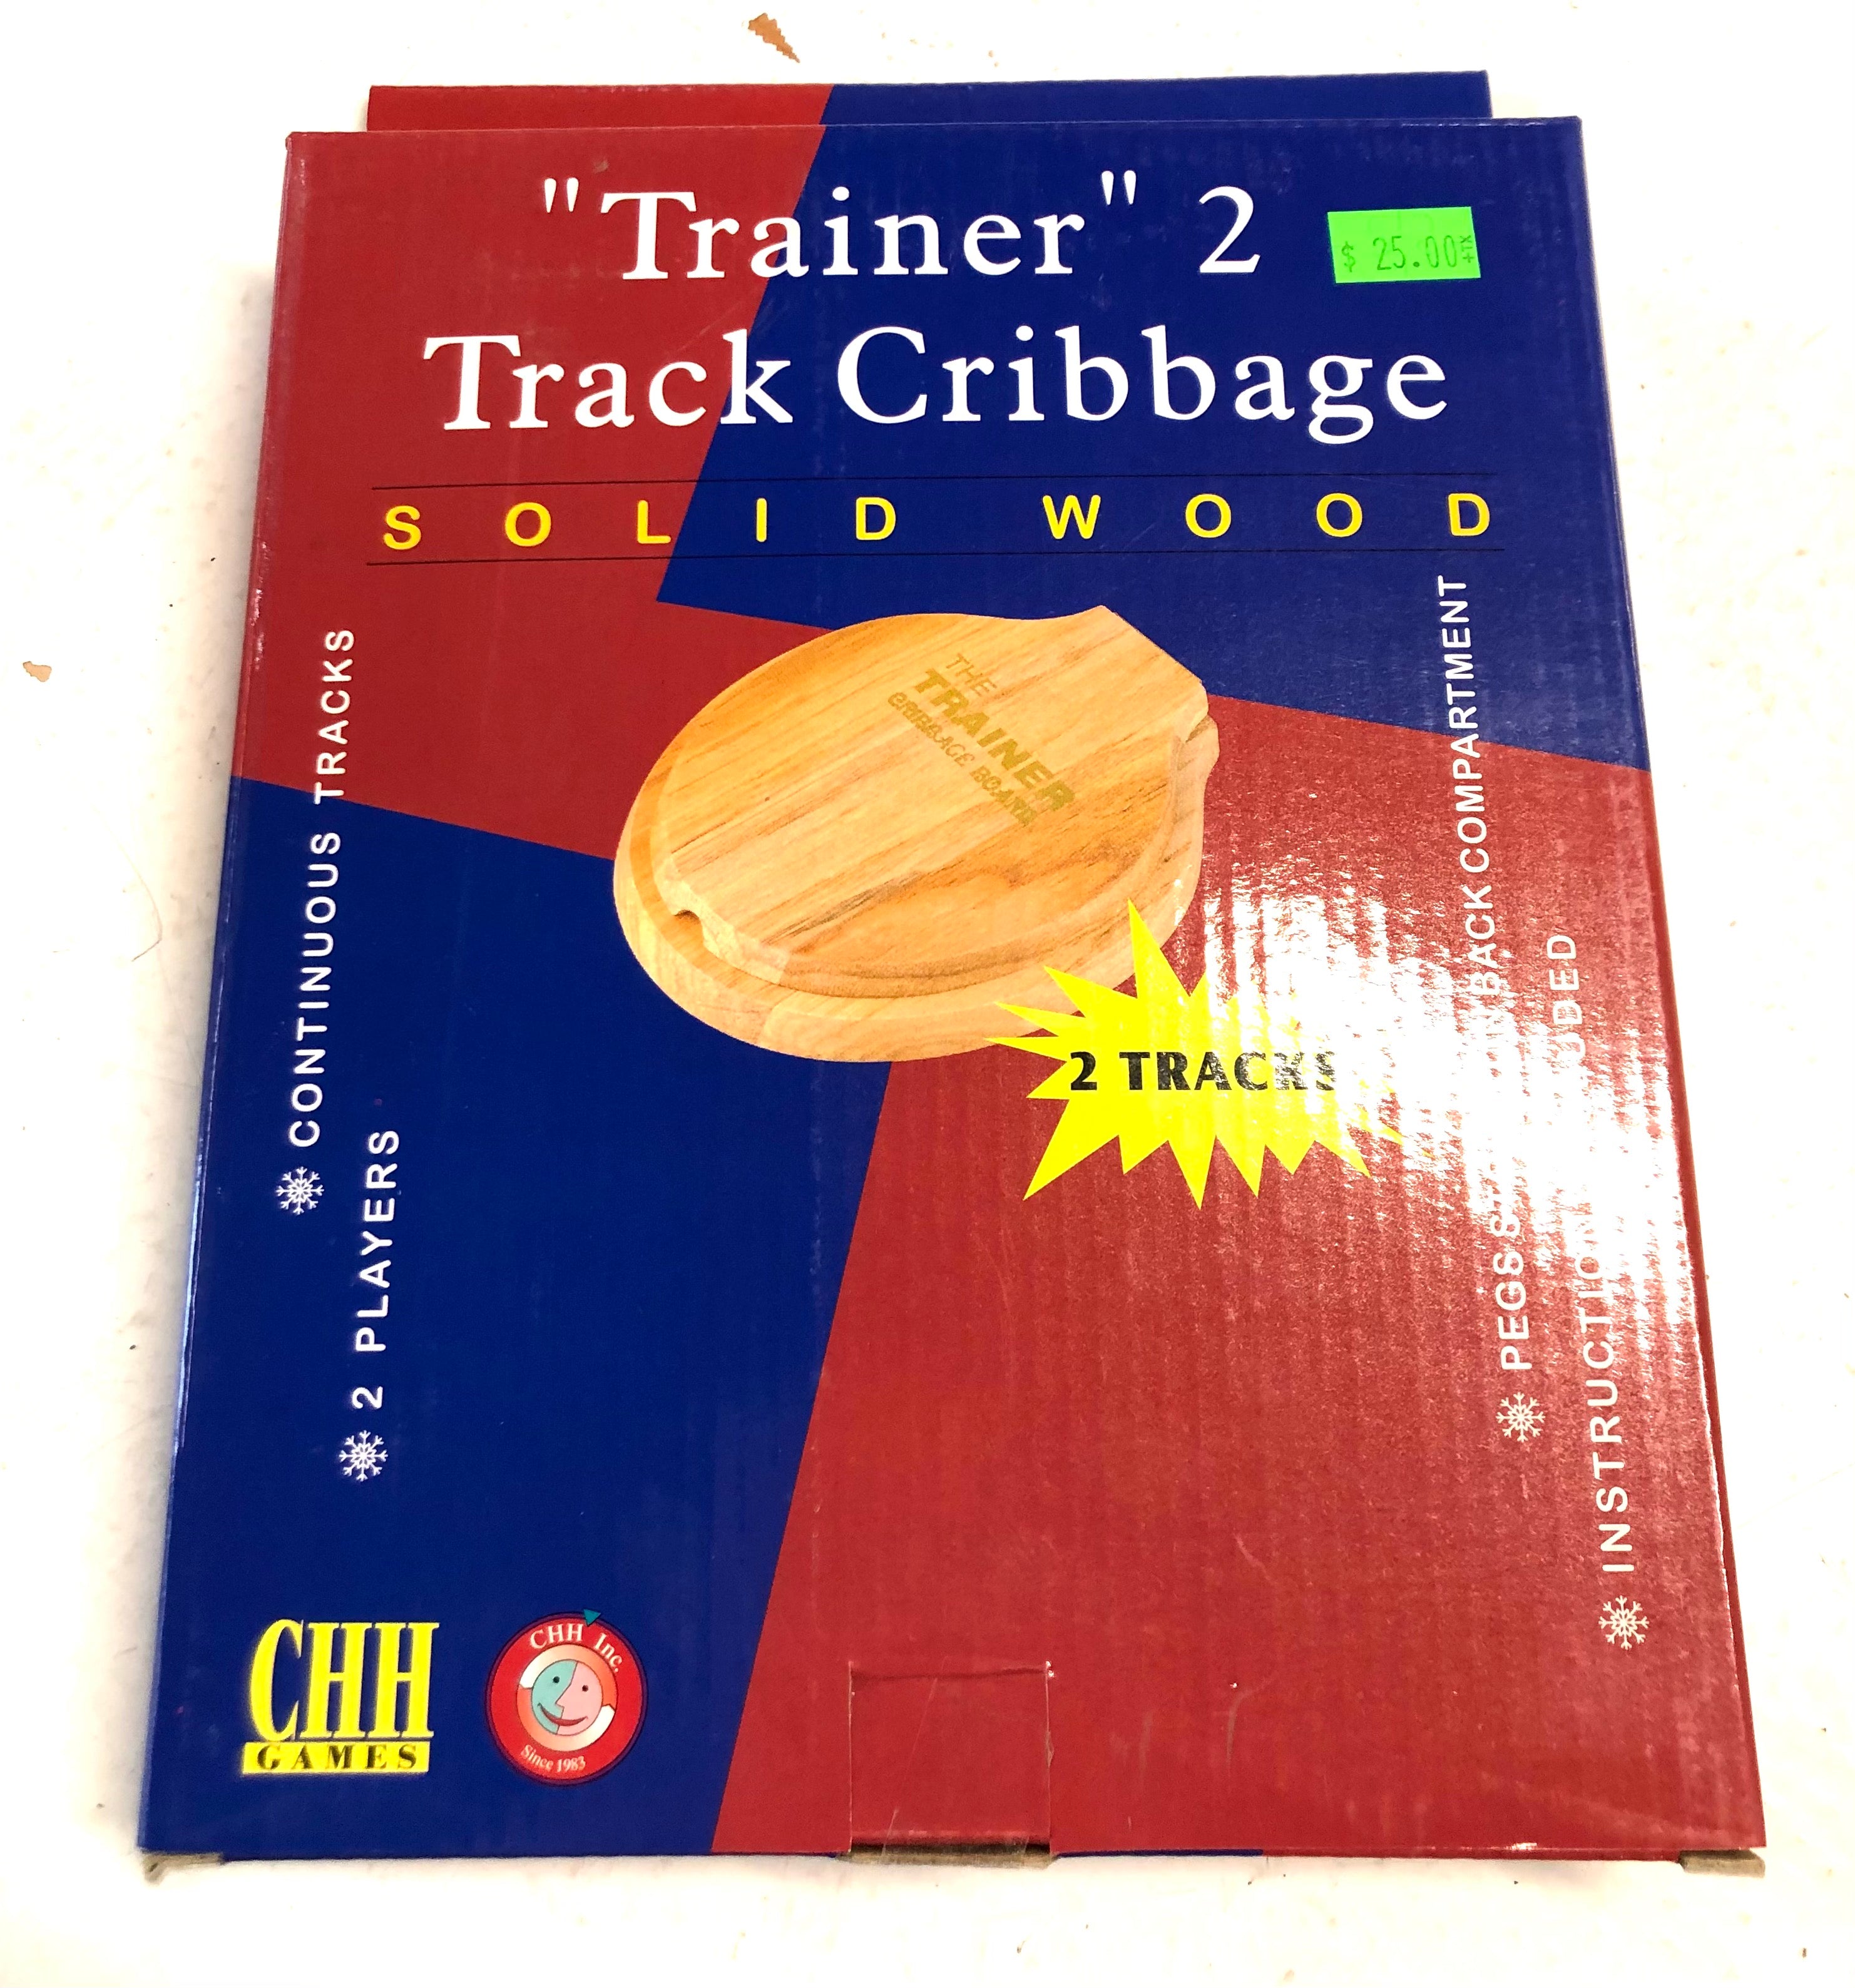 Trainer 2 Track Cribbage | All Aboard Games